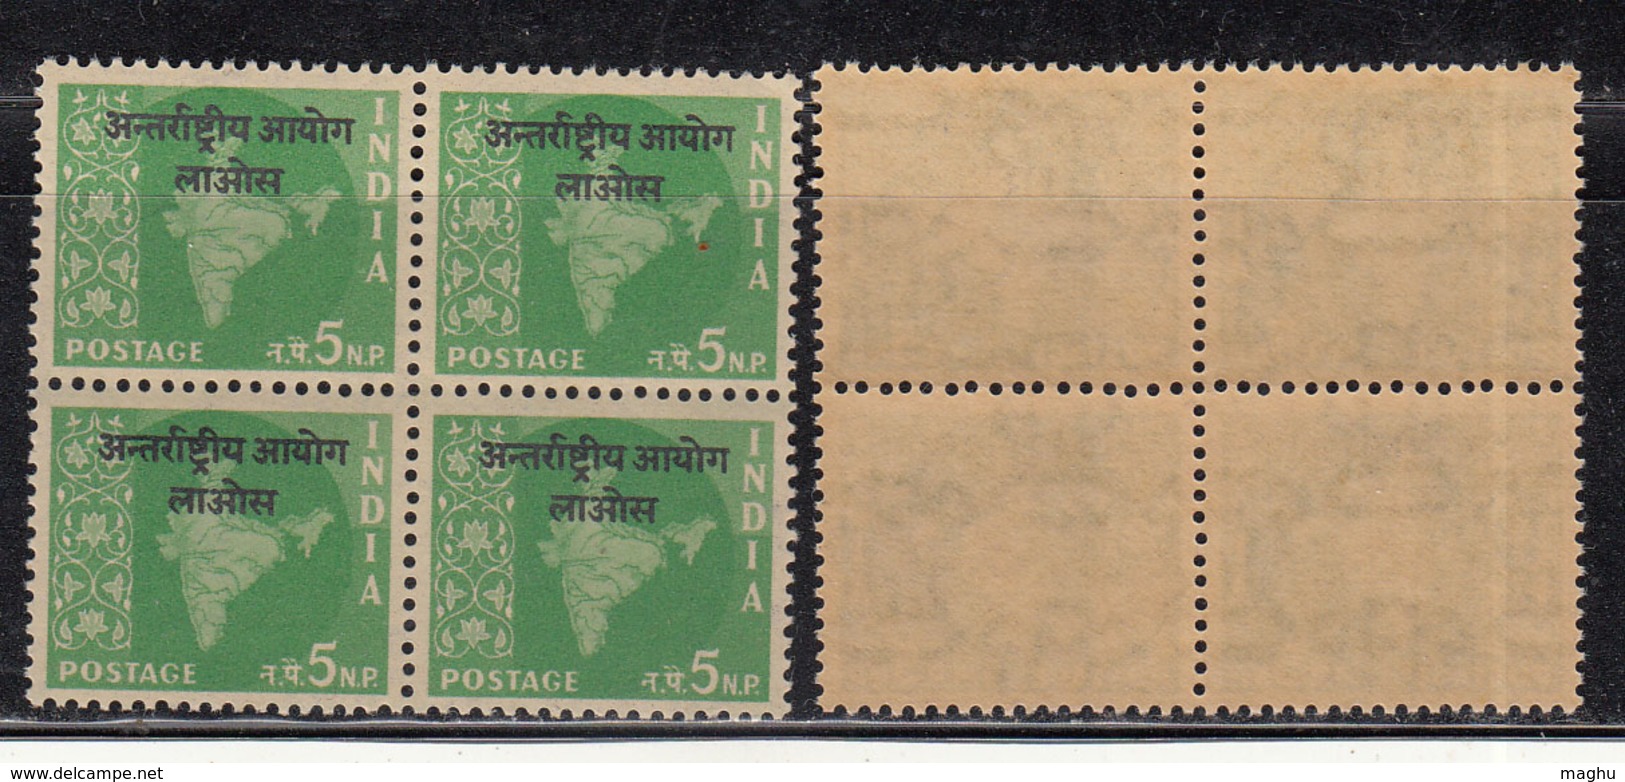 Block Of 4, 5np Ovpt Laos On Map Series,  India MNH 1962, Ashokan Watermark, - Franquicia Militar